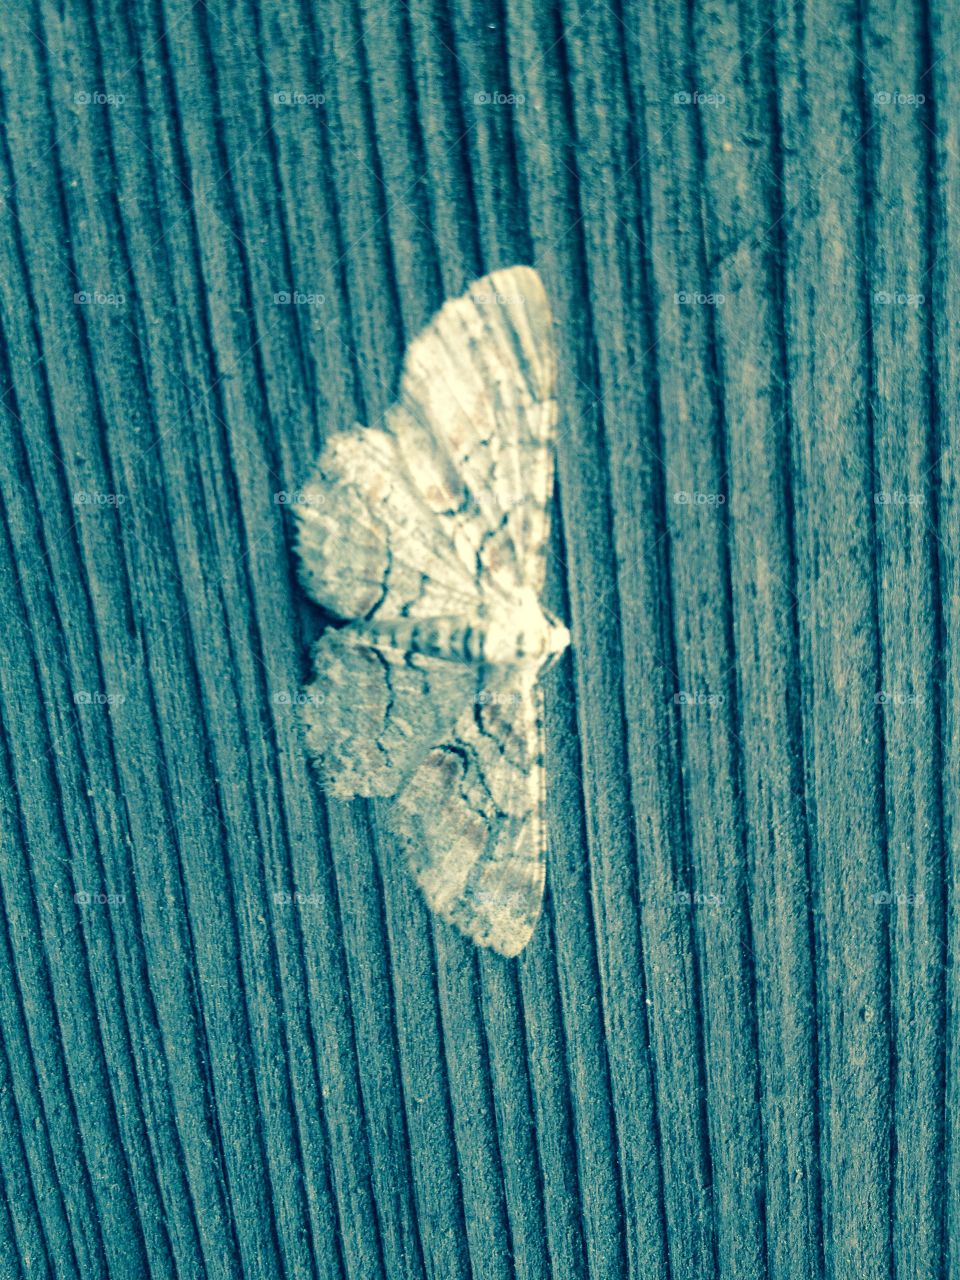 Moth. Beautiful moth ontop of wood